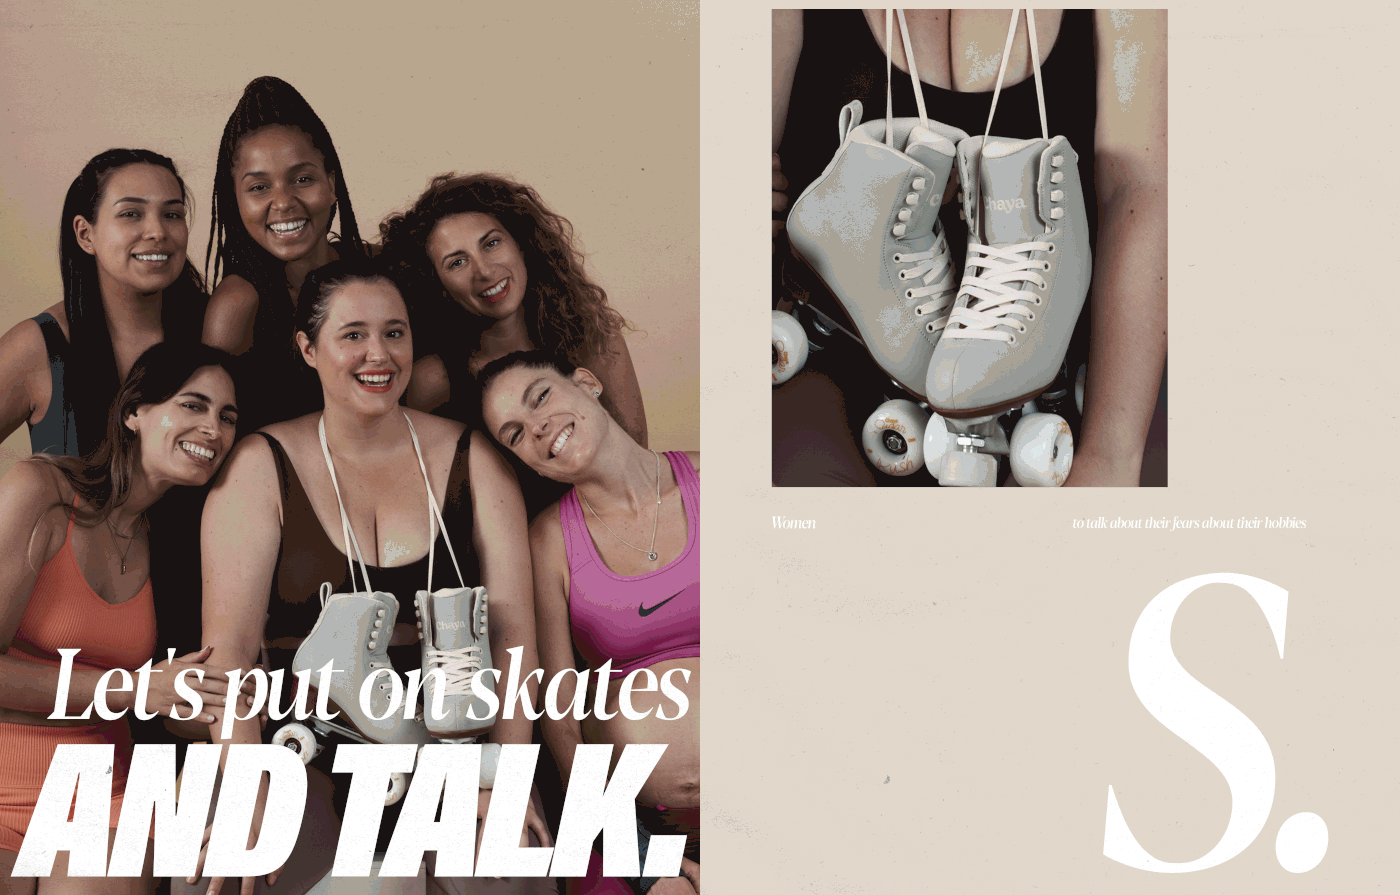 campaign women skates design visual identity Social media post Advertising  rollerskates talks women empowerment